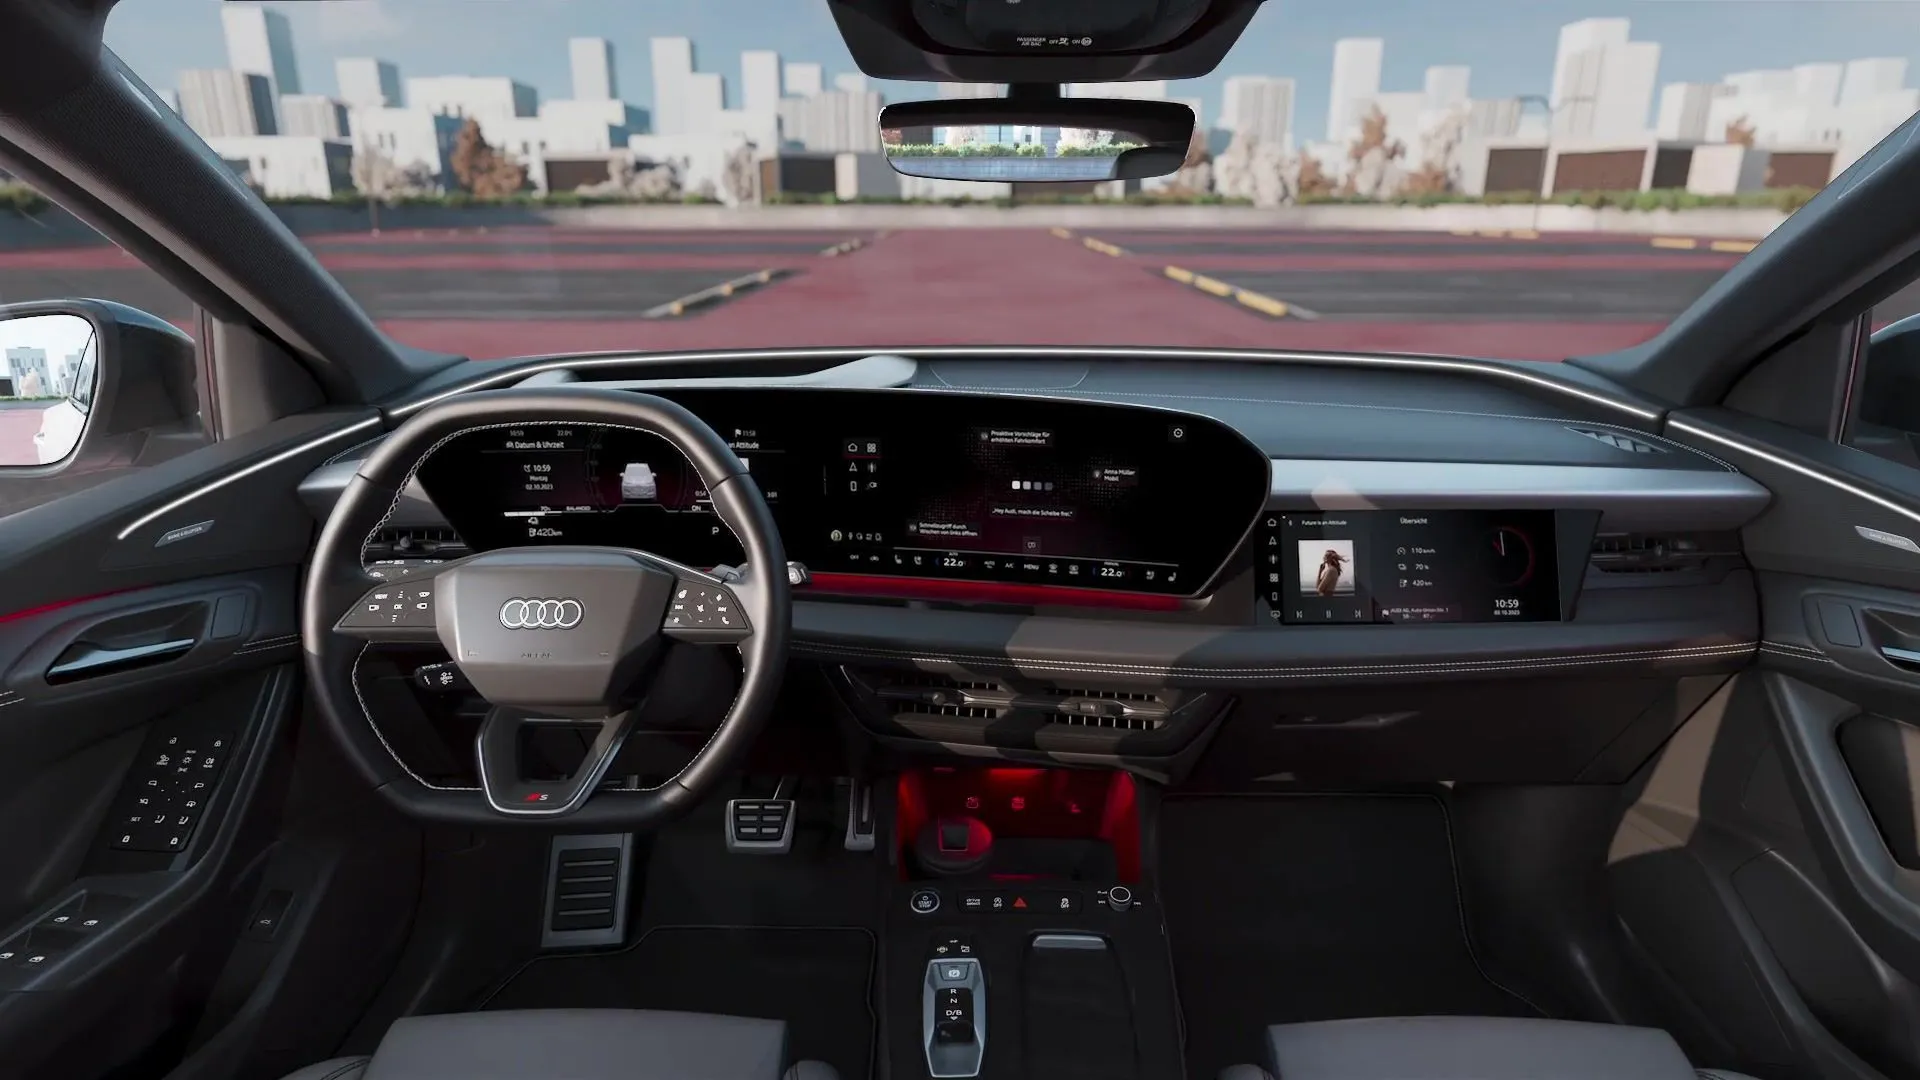 Audi Q6 e-tron Prototyp – Interieur-Bedienkonzept und Betriebssystem - Animation